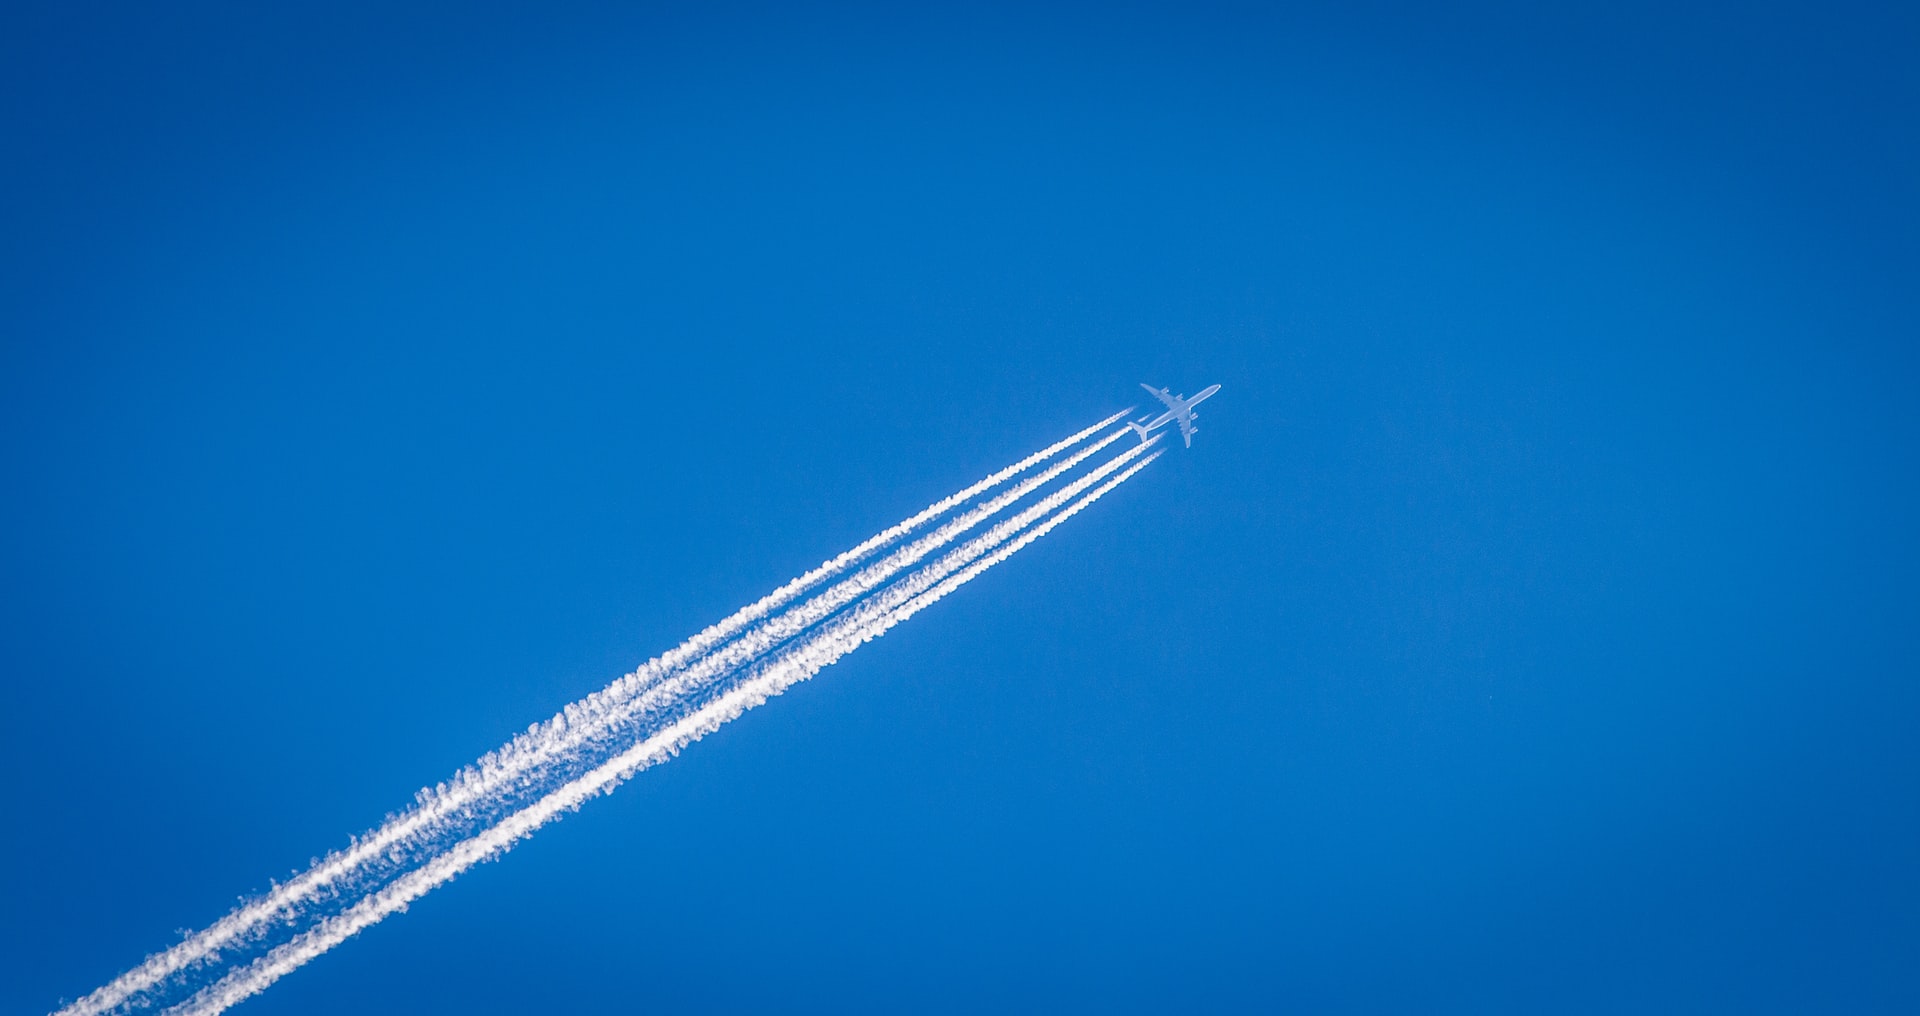 A passenger jet leaves a contrail against a bright blue sky